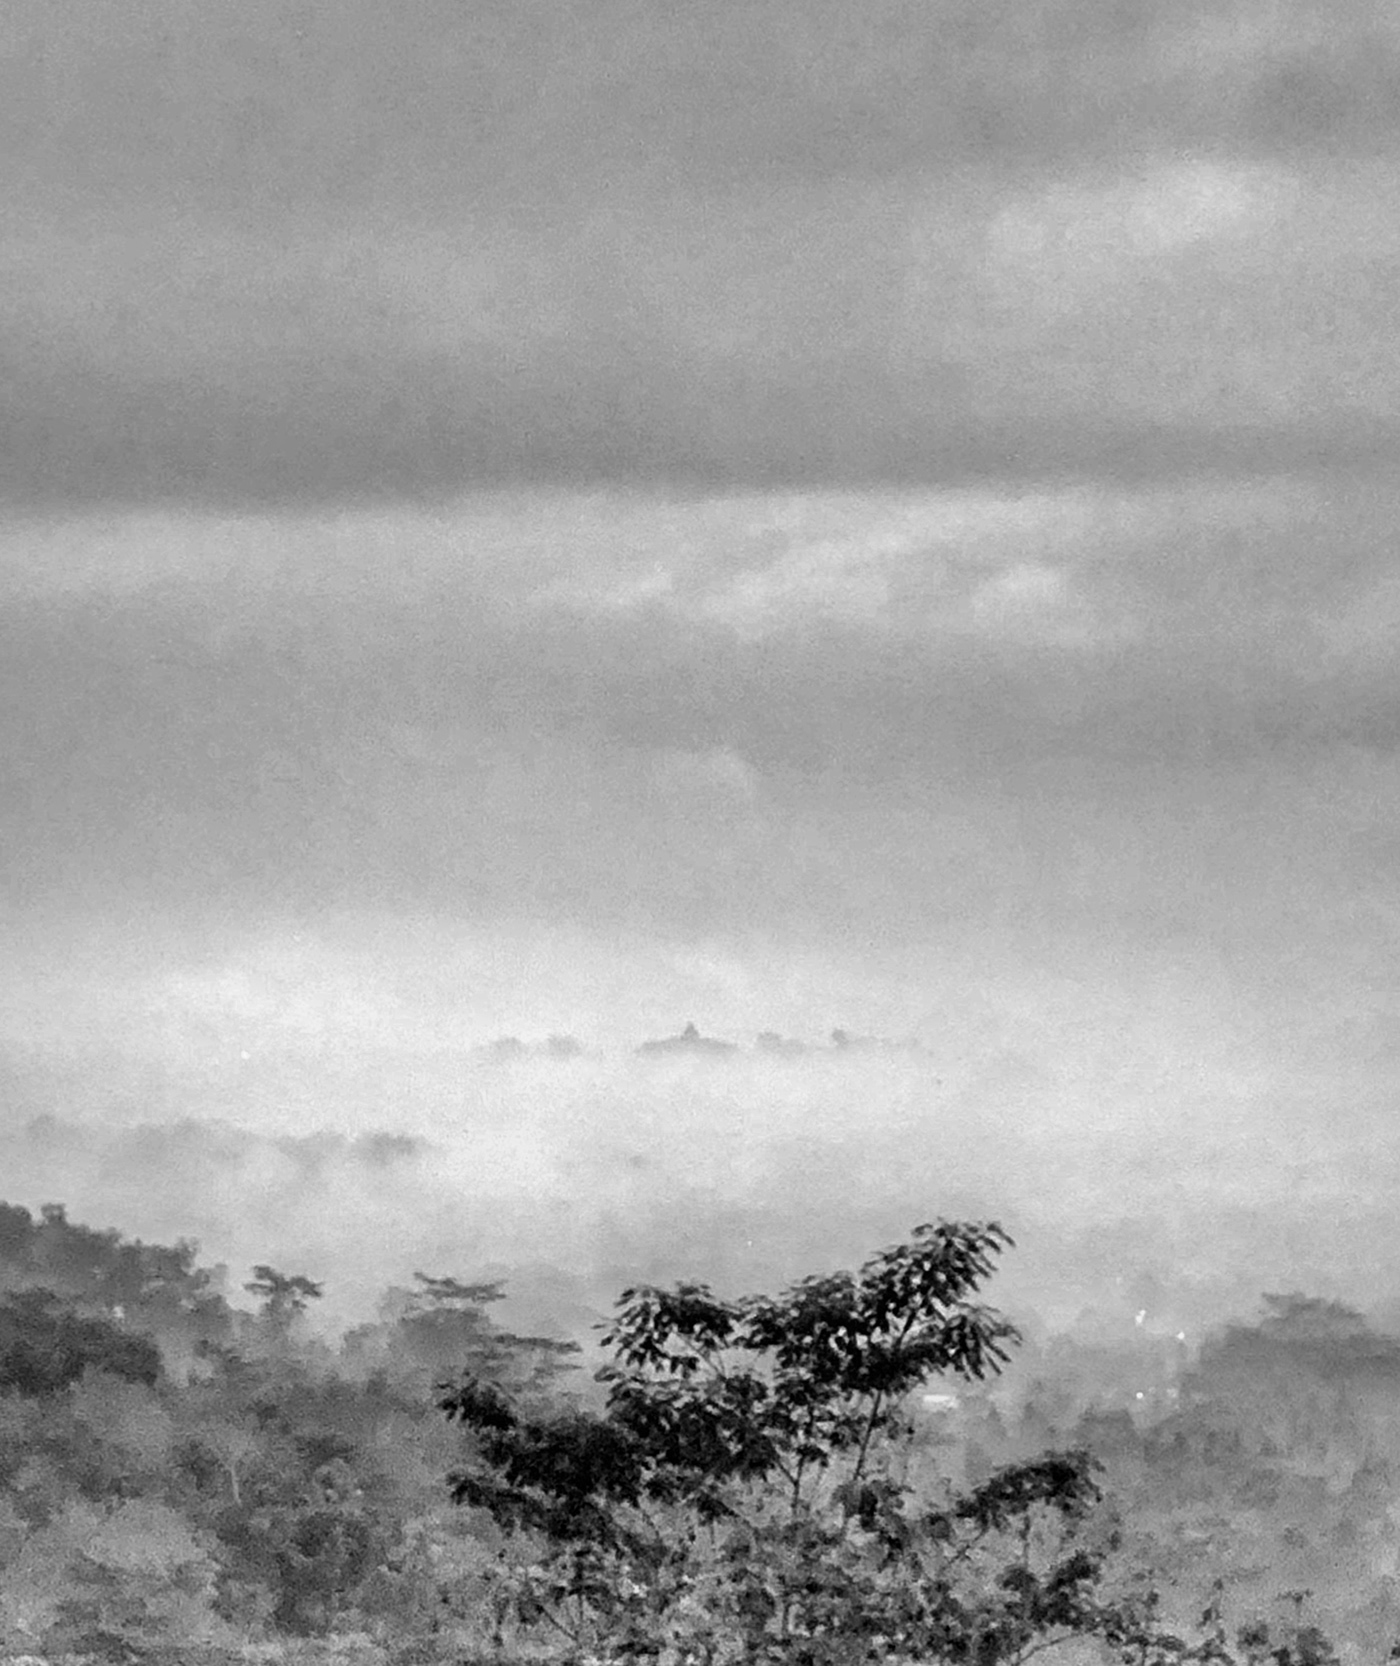 Tiny Borobudur in the fog